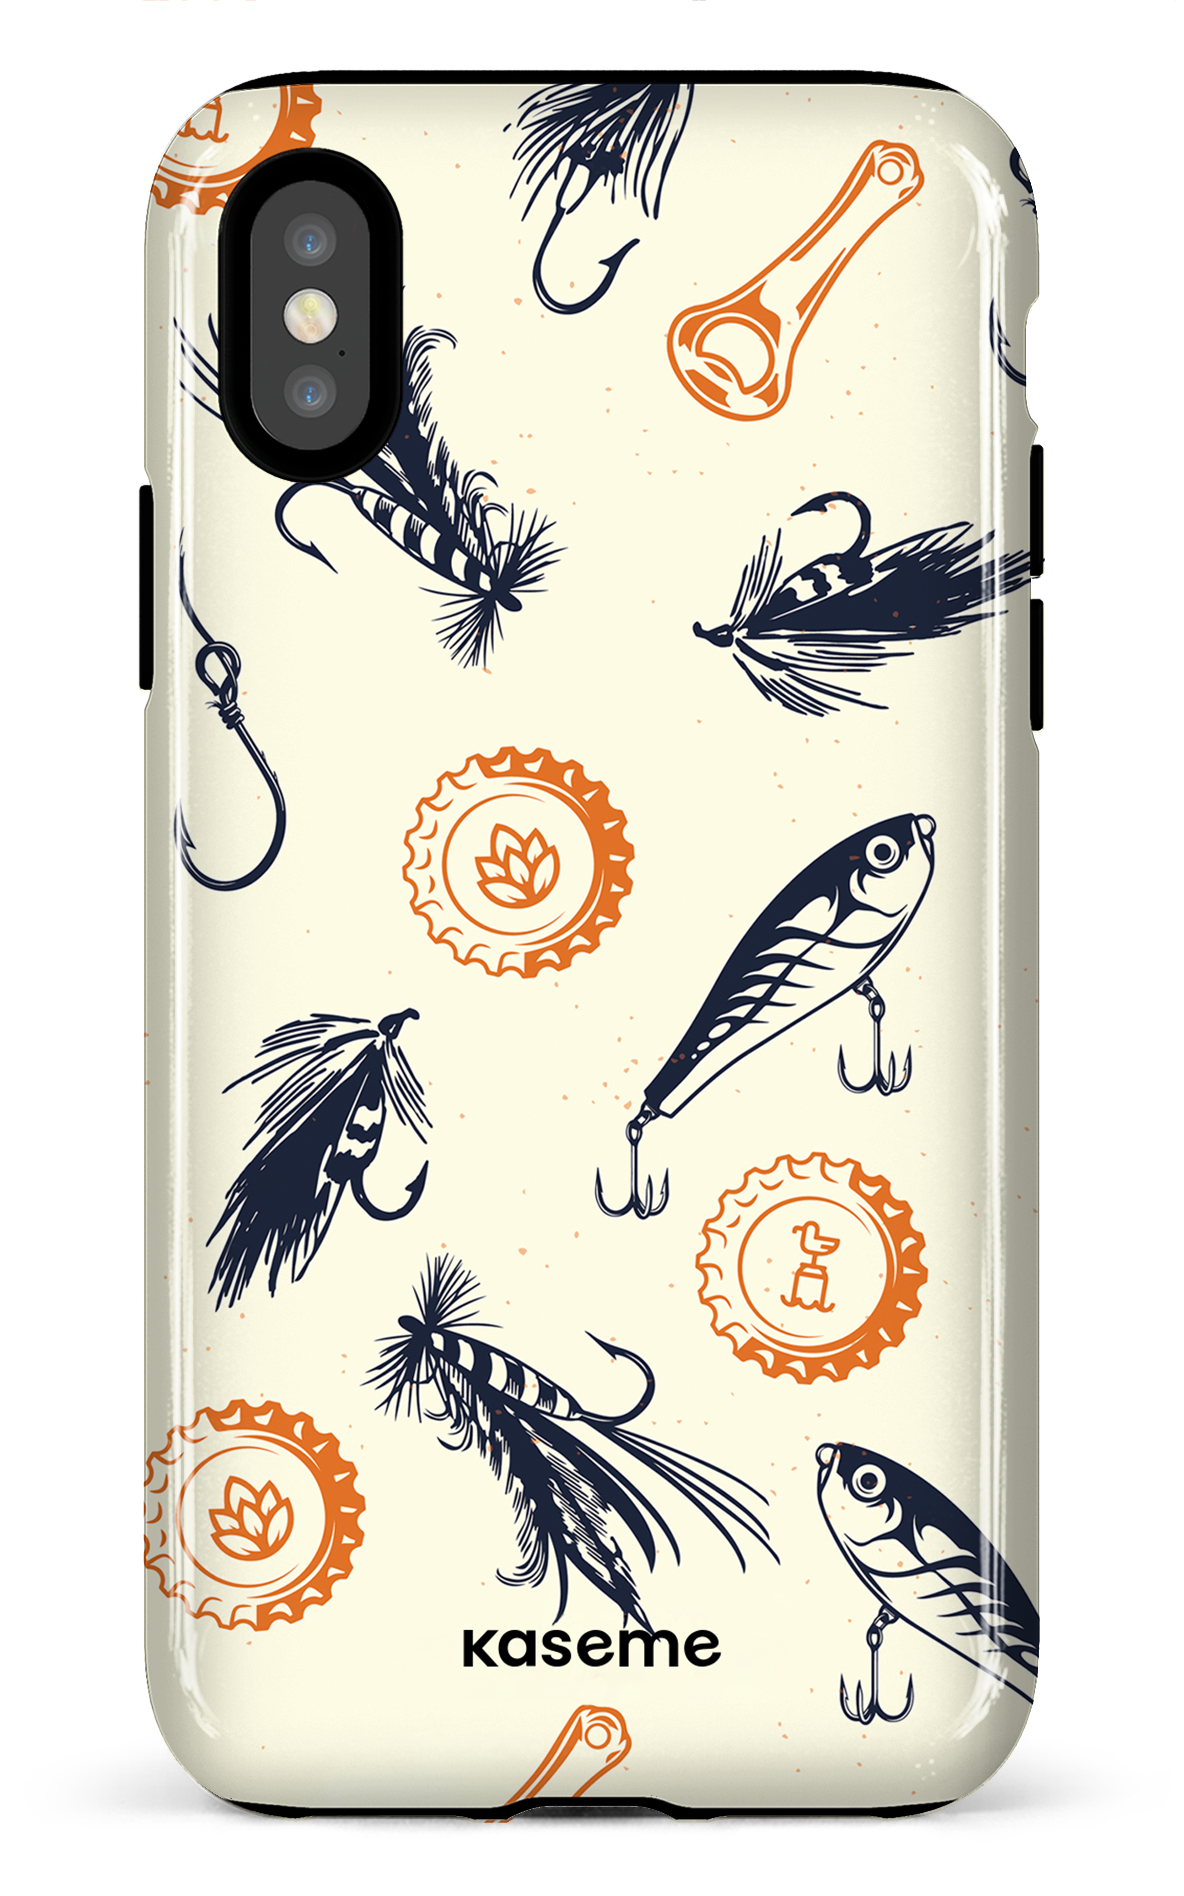 Fishy - iPhone X/XS